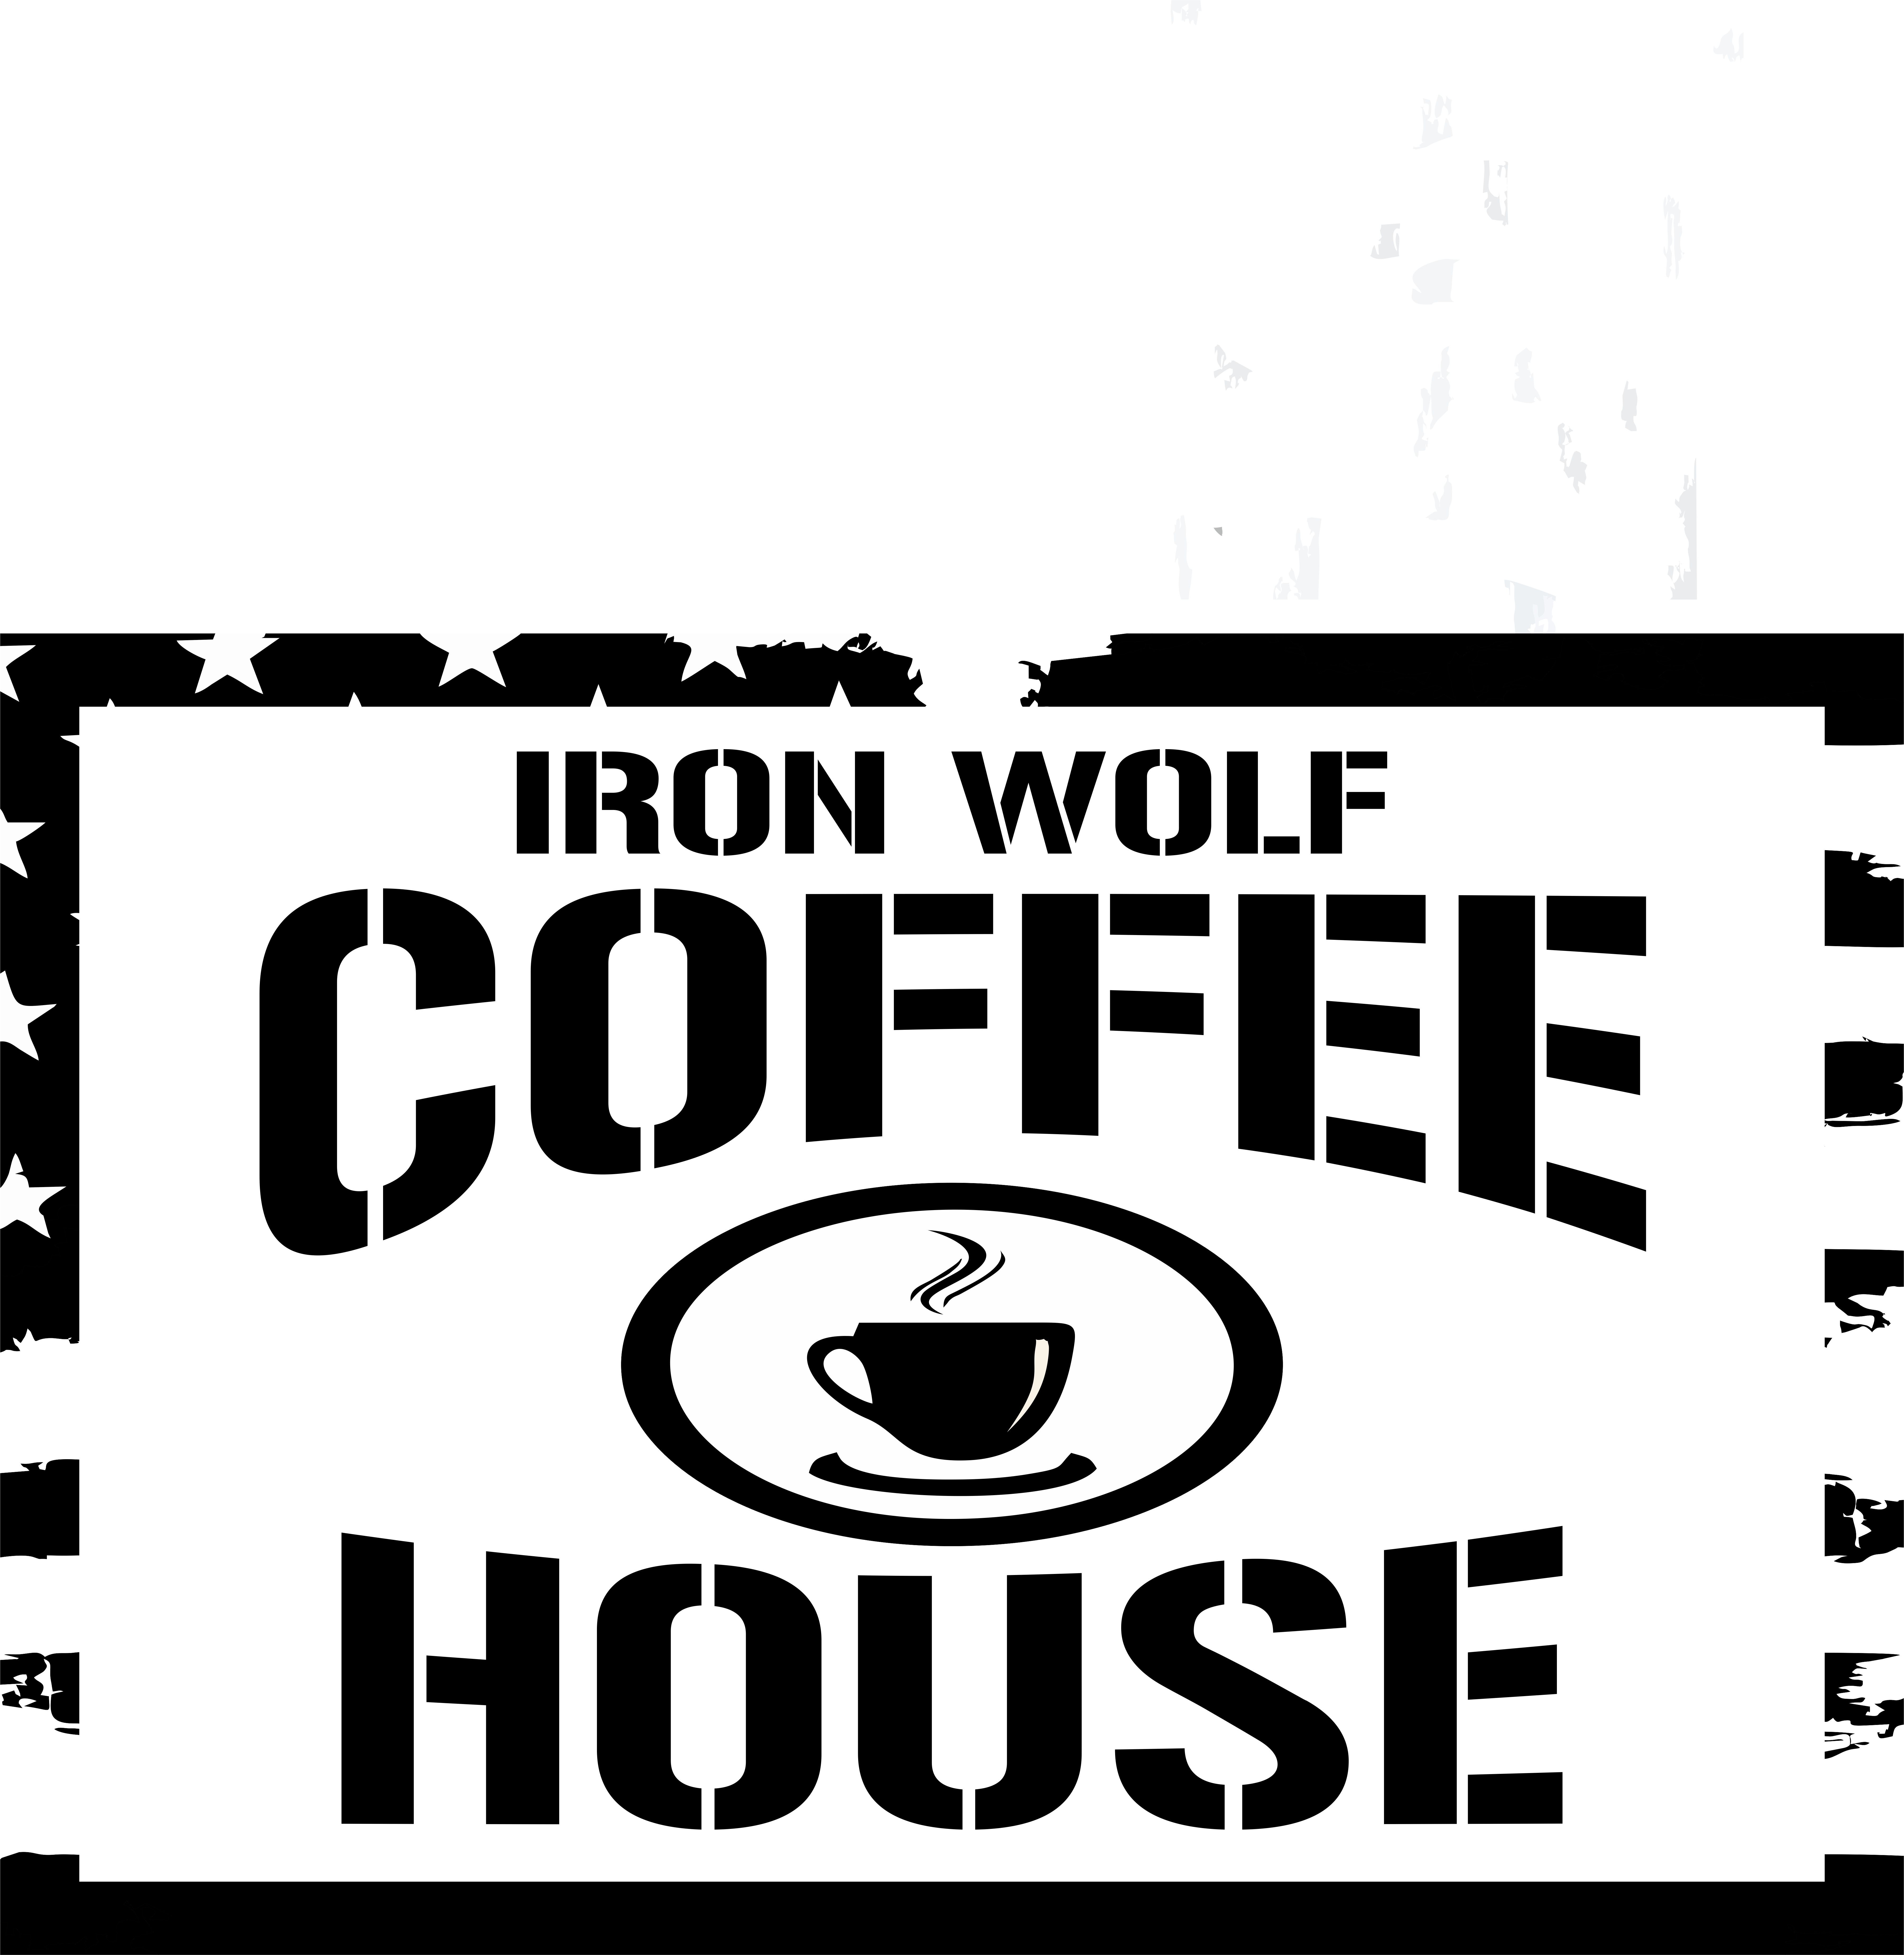 Iron Wolf Coffee House 121 East Main St.